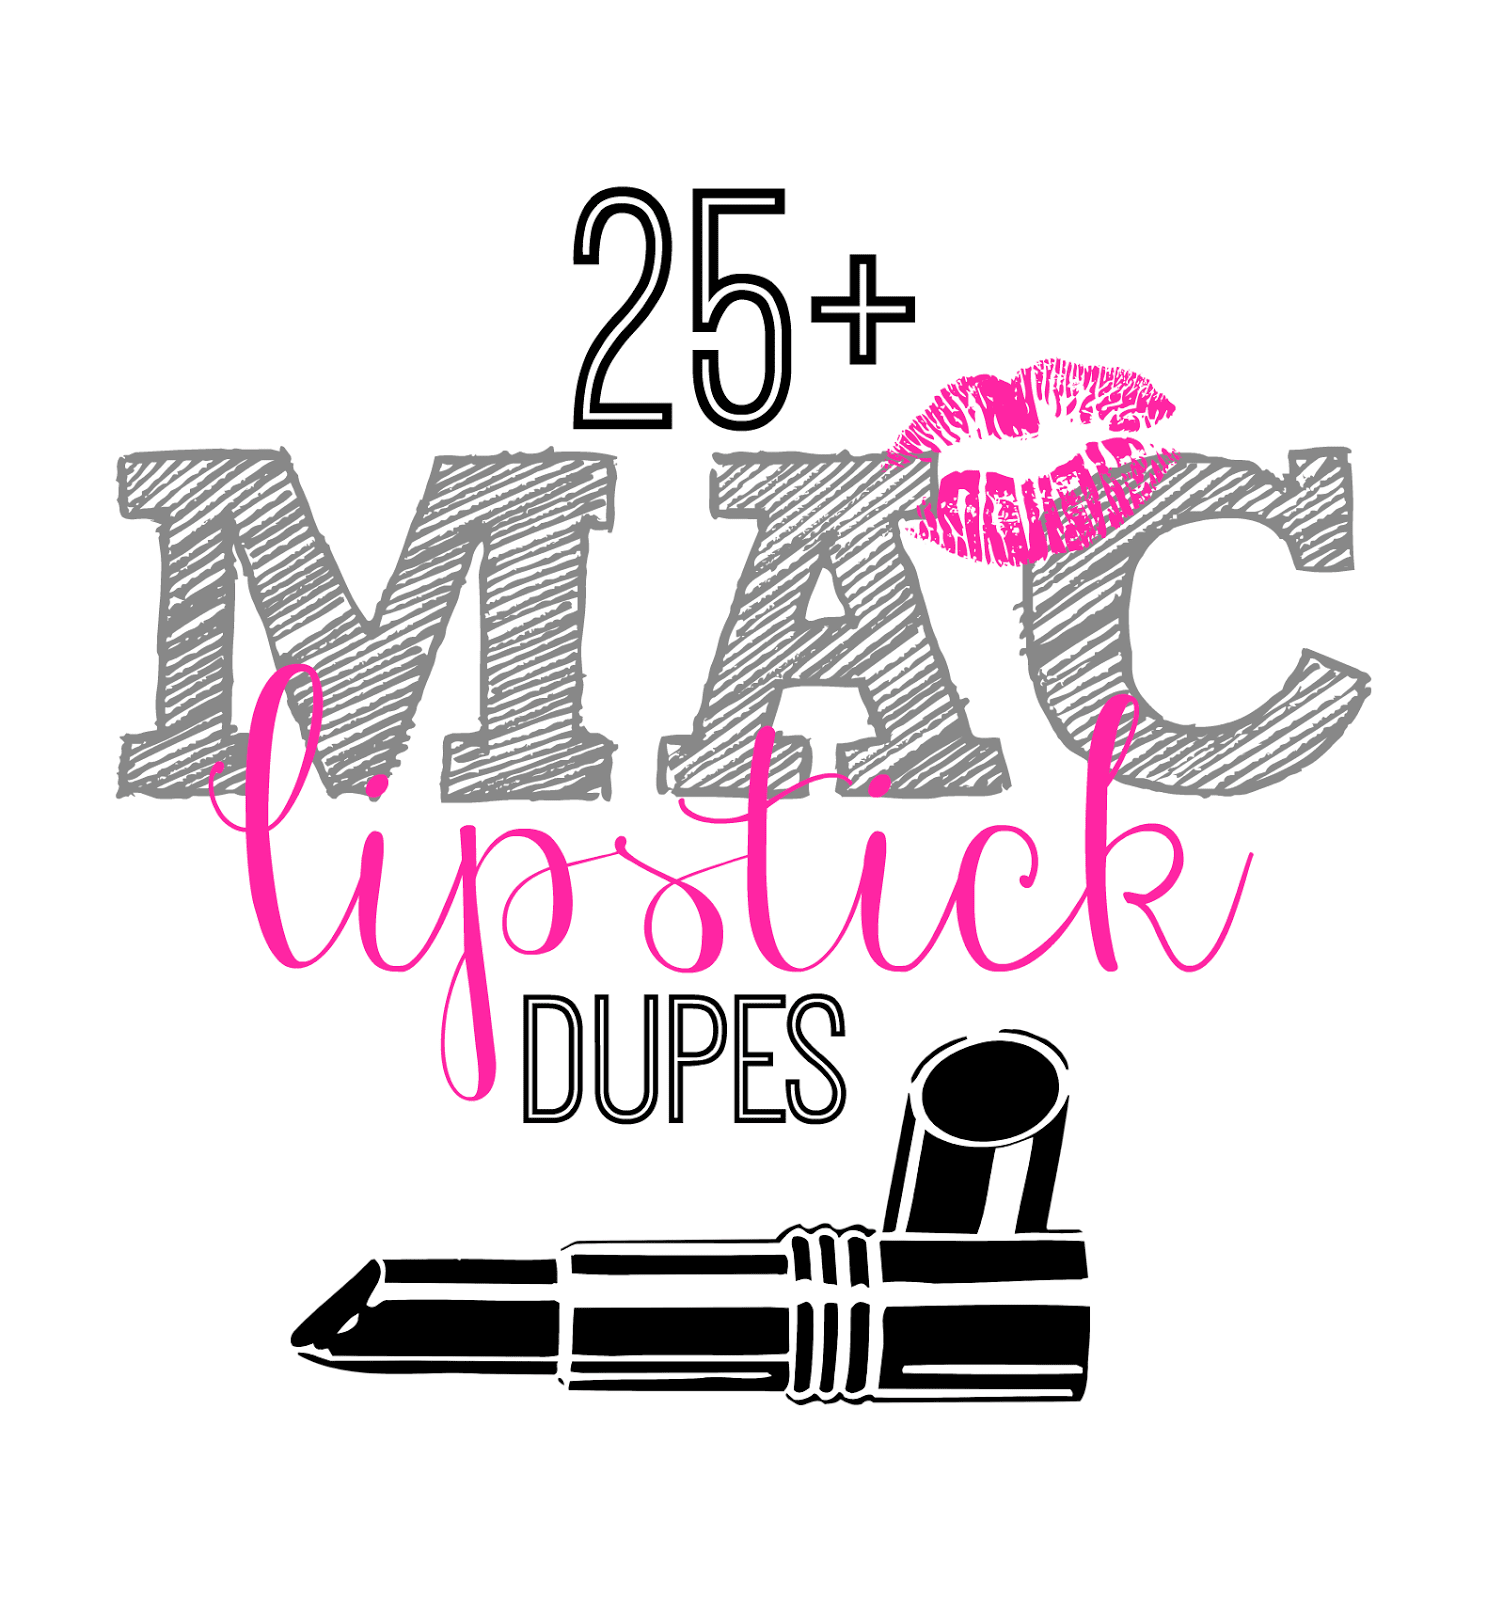 25+ MAC Lipstick Drugstore Dupes | This Girl's Life Blog